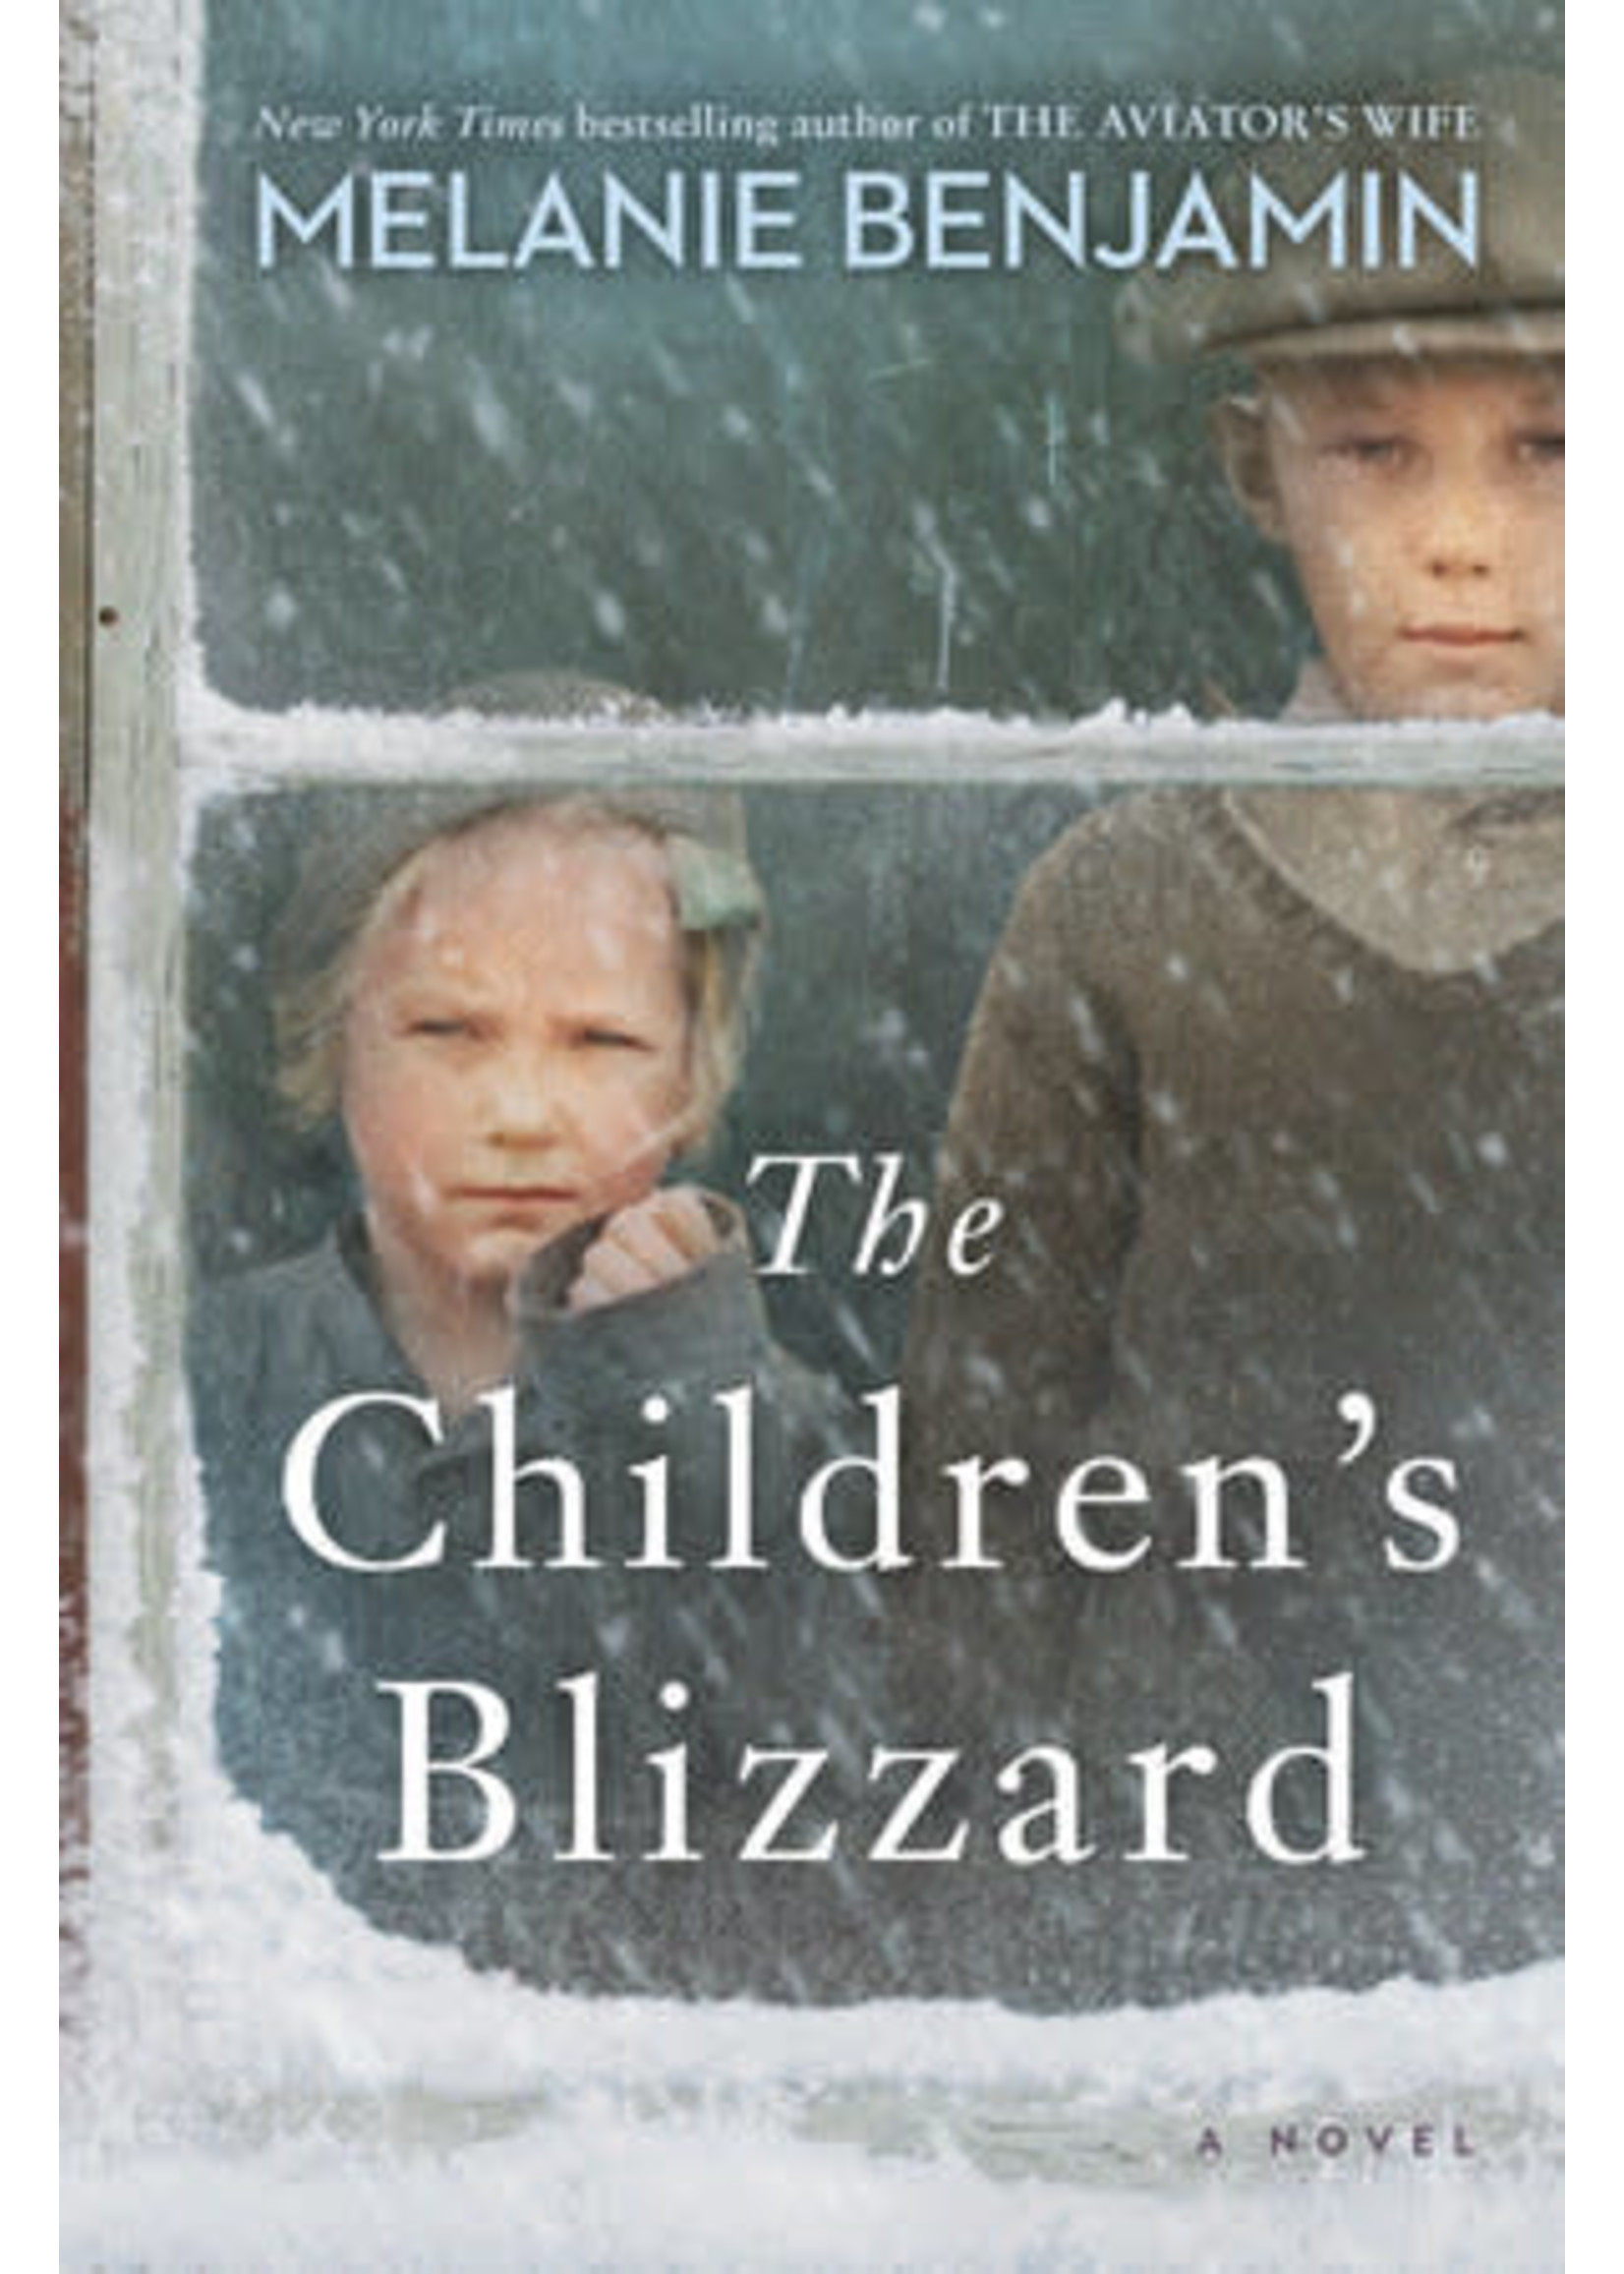 The Children's Blizzard - A Novel by Melanie Benjamin